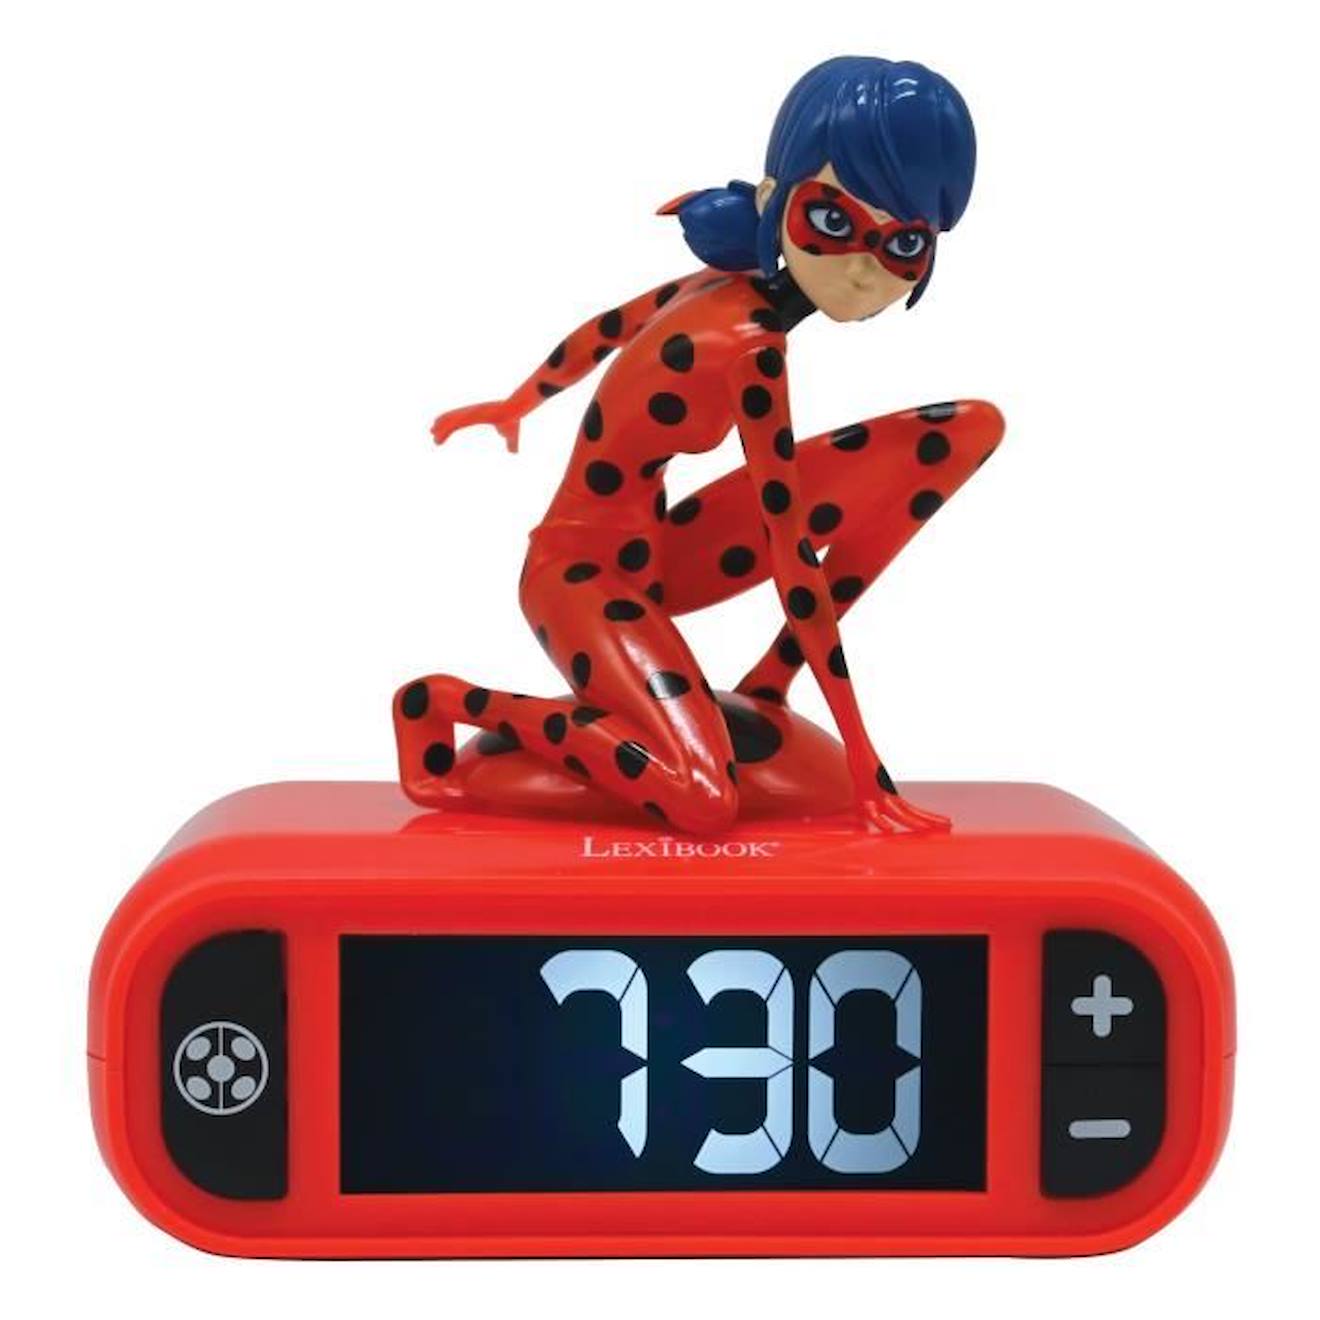 Radio réveil Miraculous - LEXIBOOK - Ladybug lumineuse - Rouge et